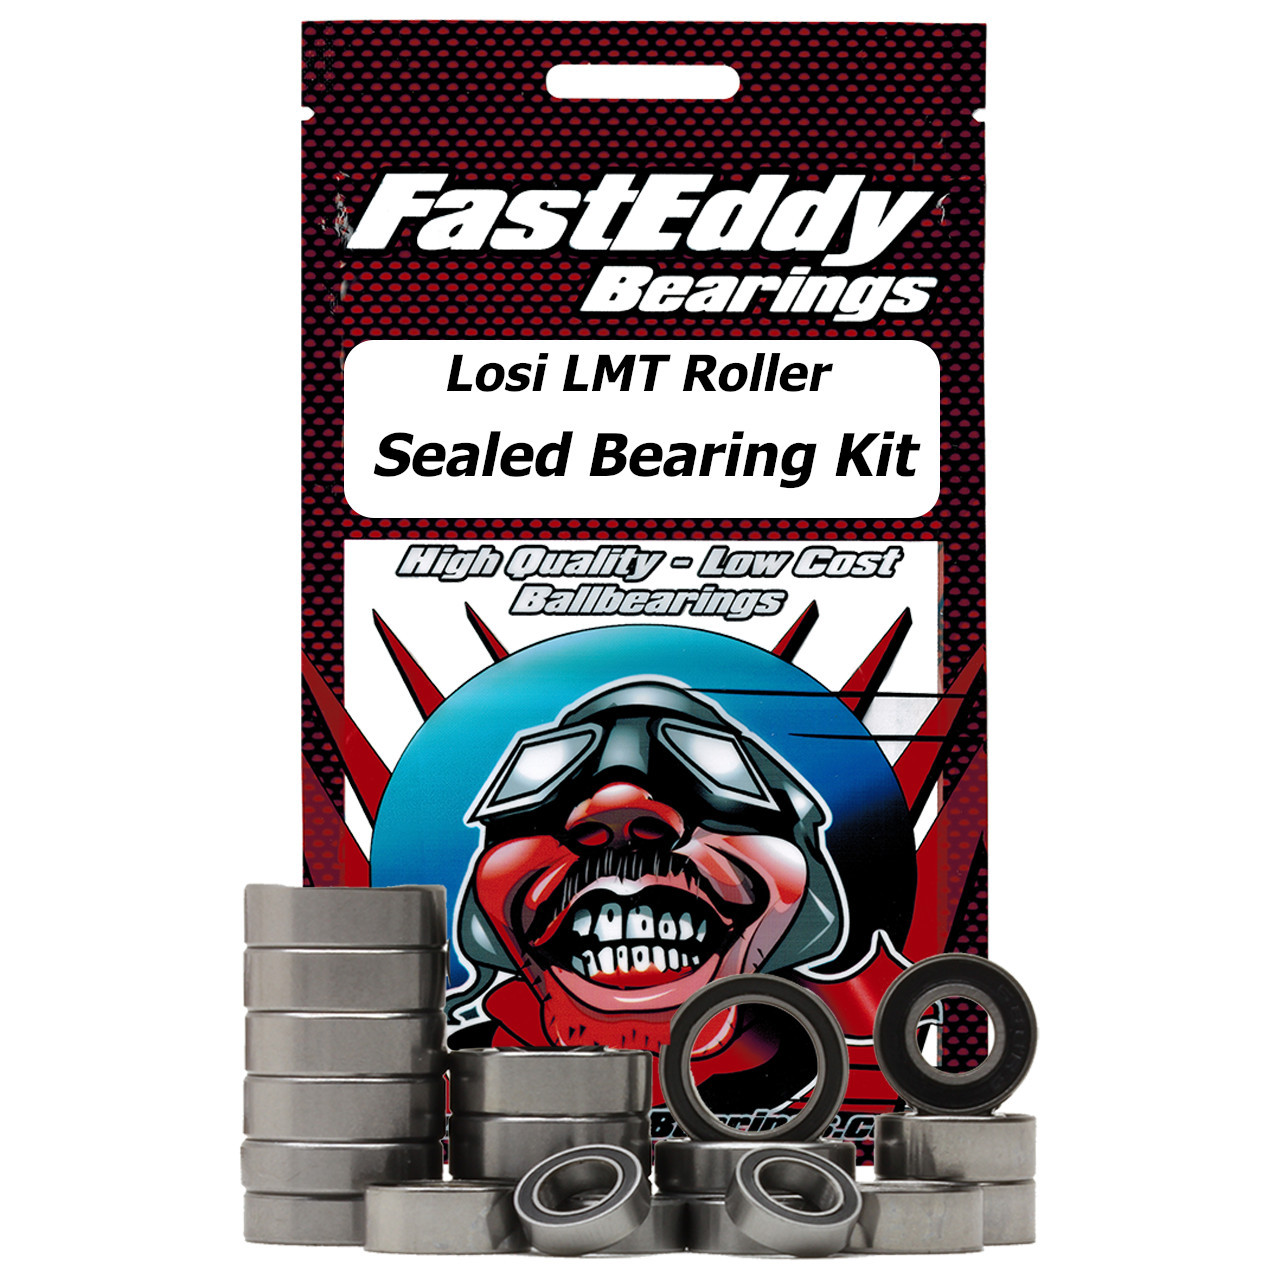 Losi LMT Roller Sealed Bearing Kit  (Fast Eddy Bearings)